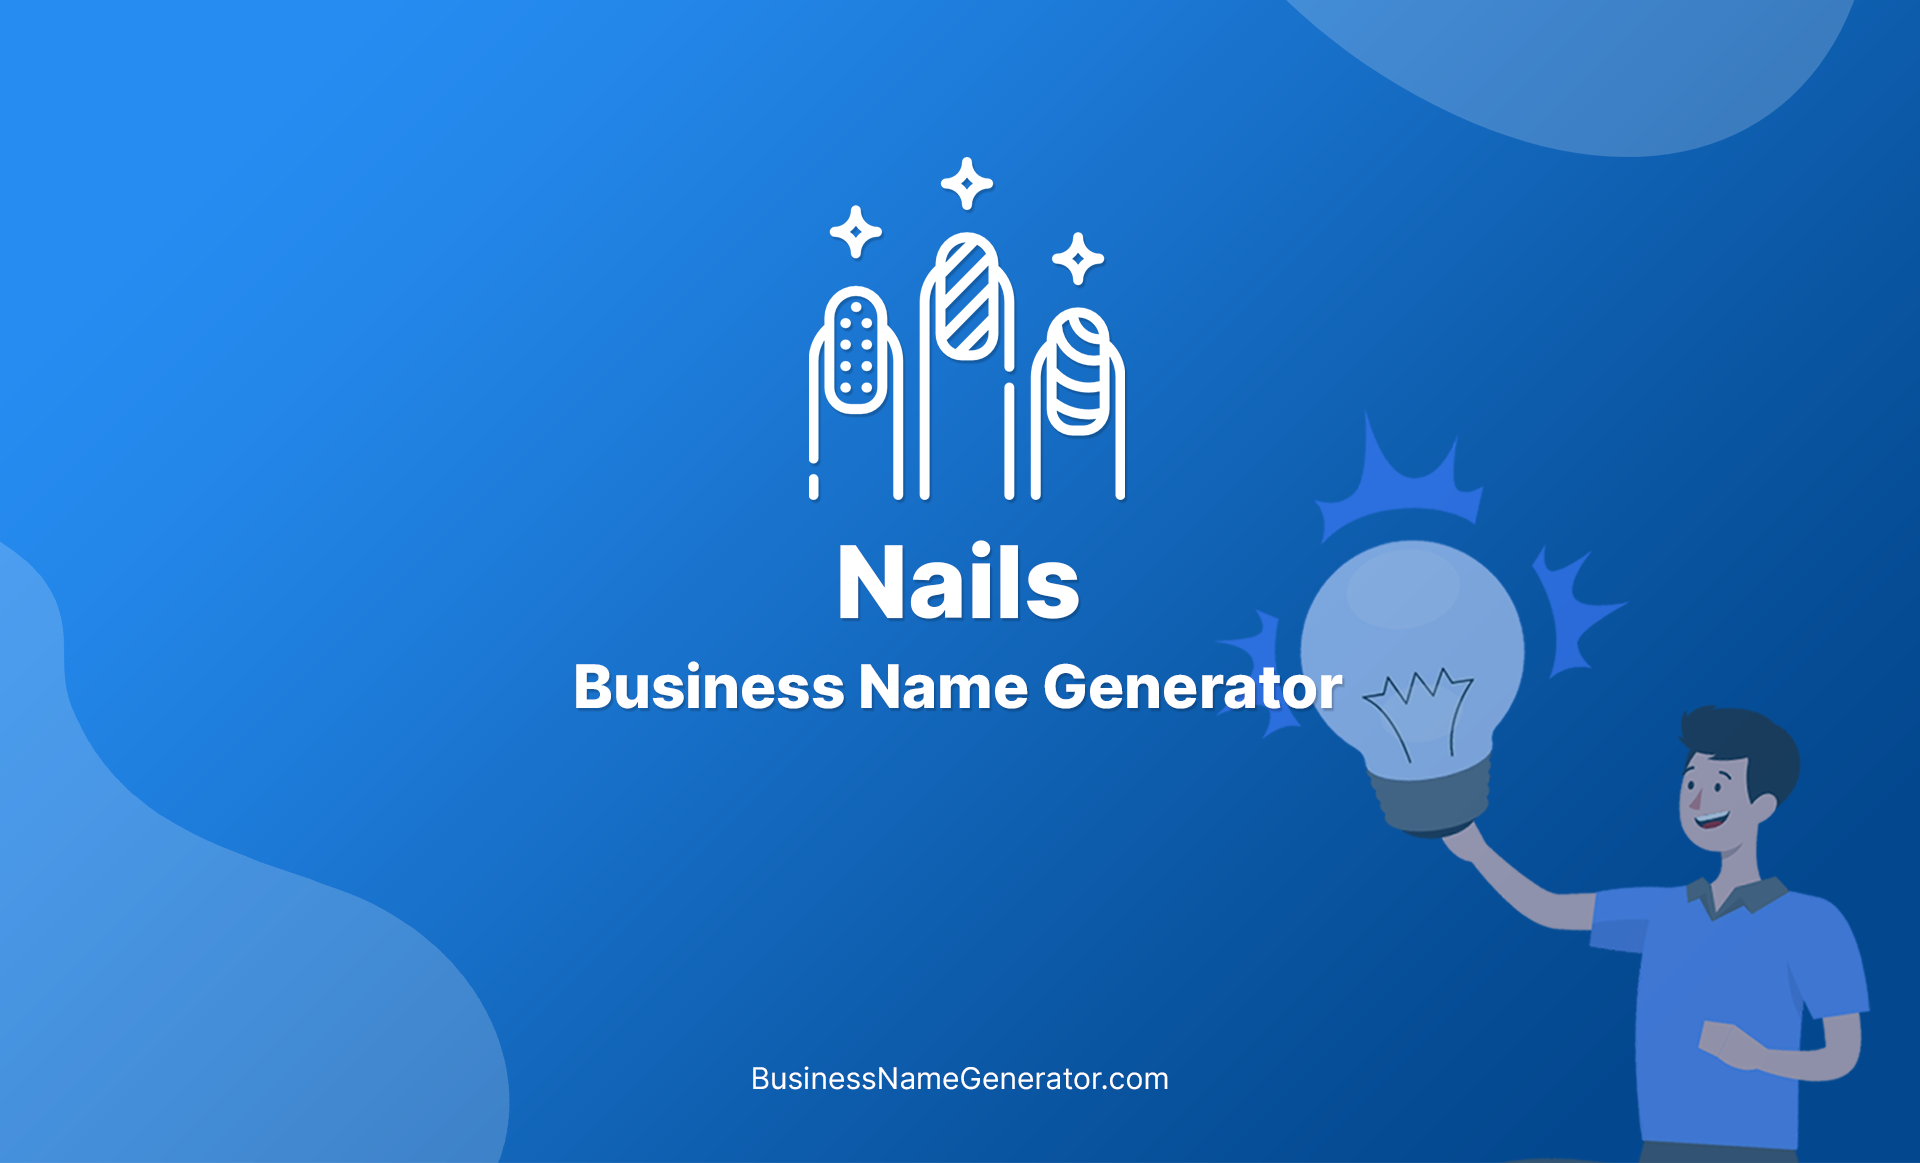 Nails Business Name Generator